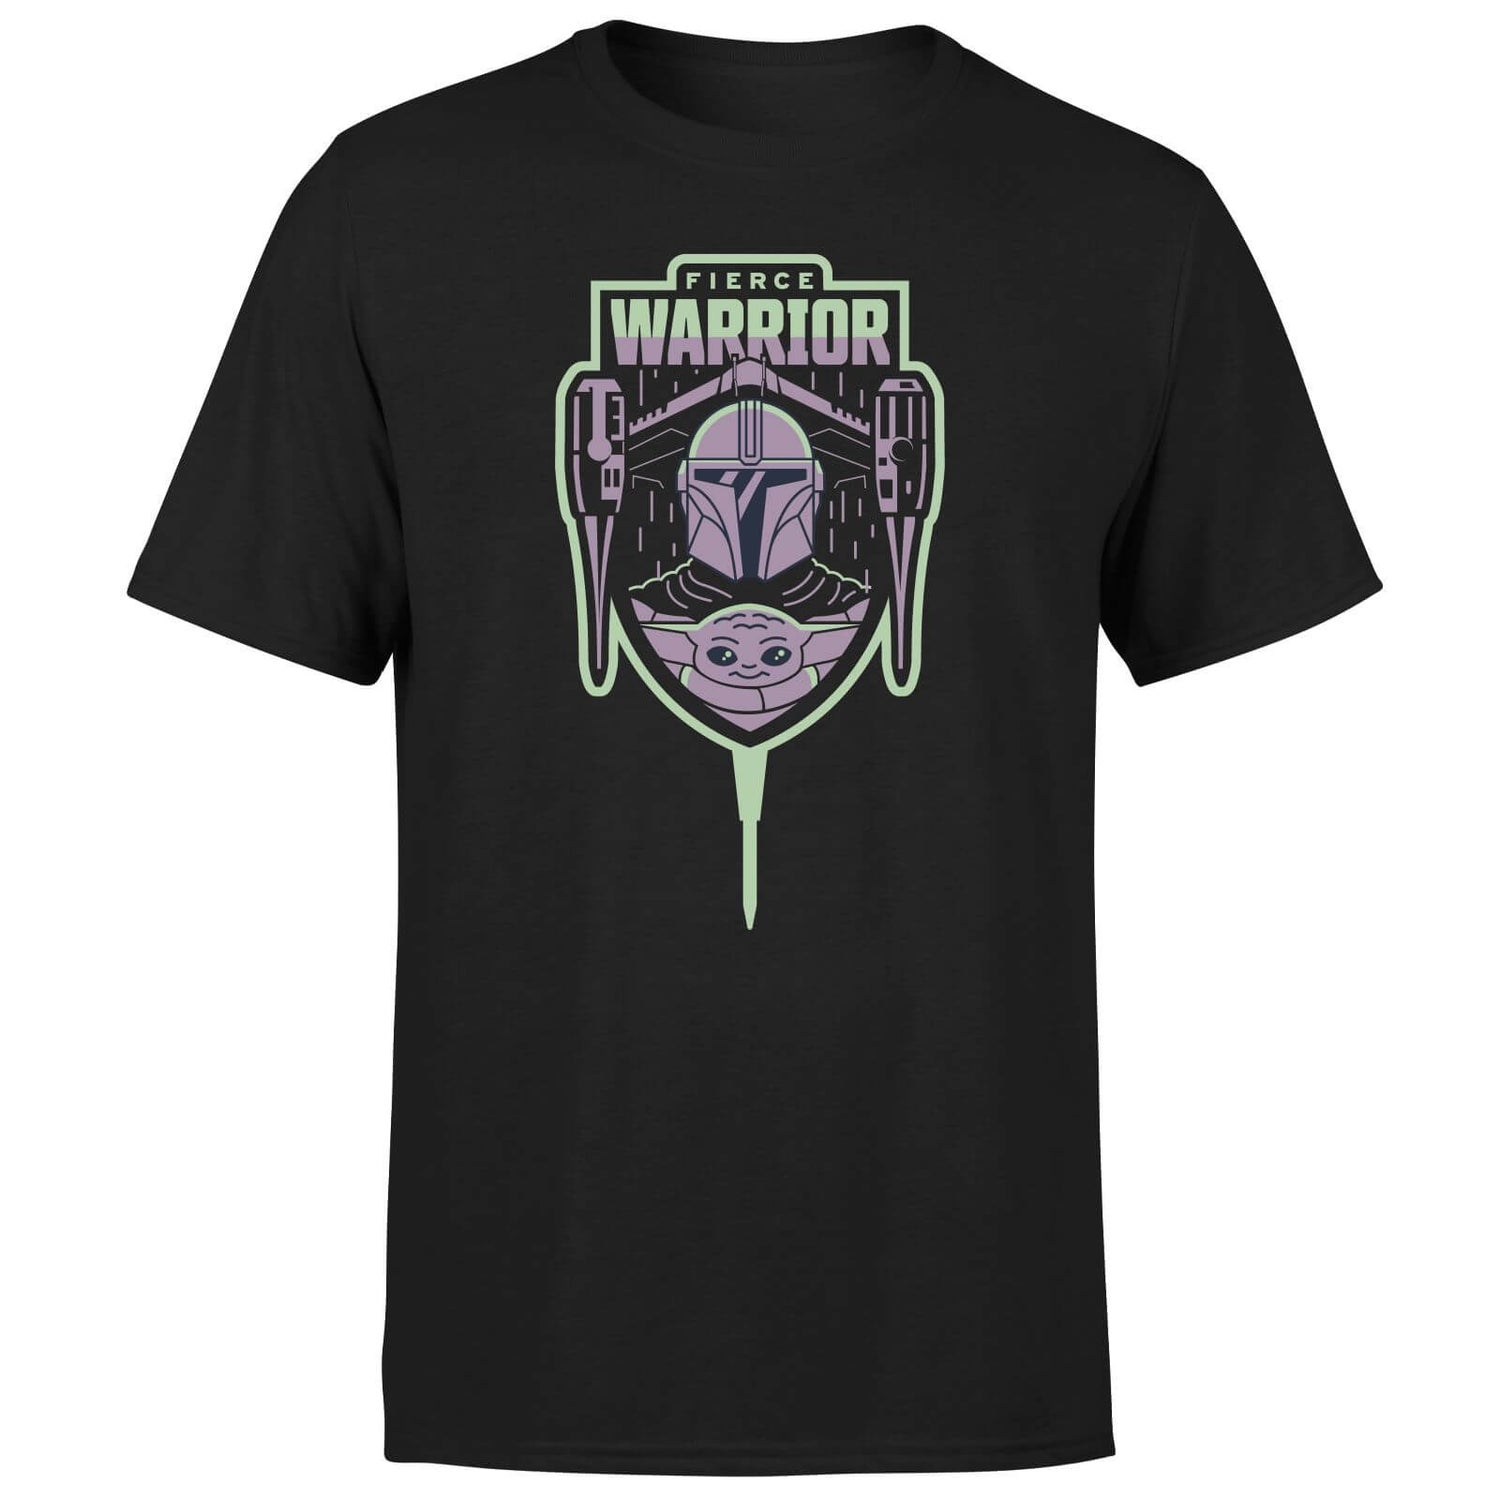 Star Wars The Mandalorian Fierce Warrior Men's T-Shirt - Black